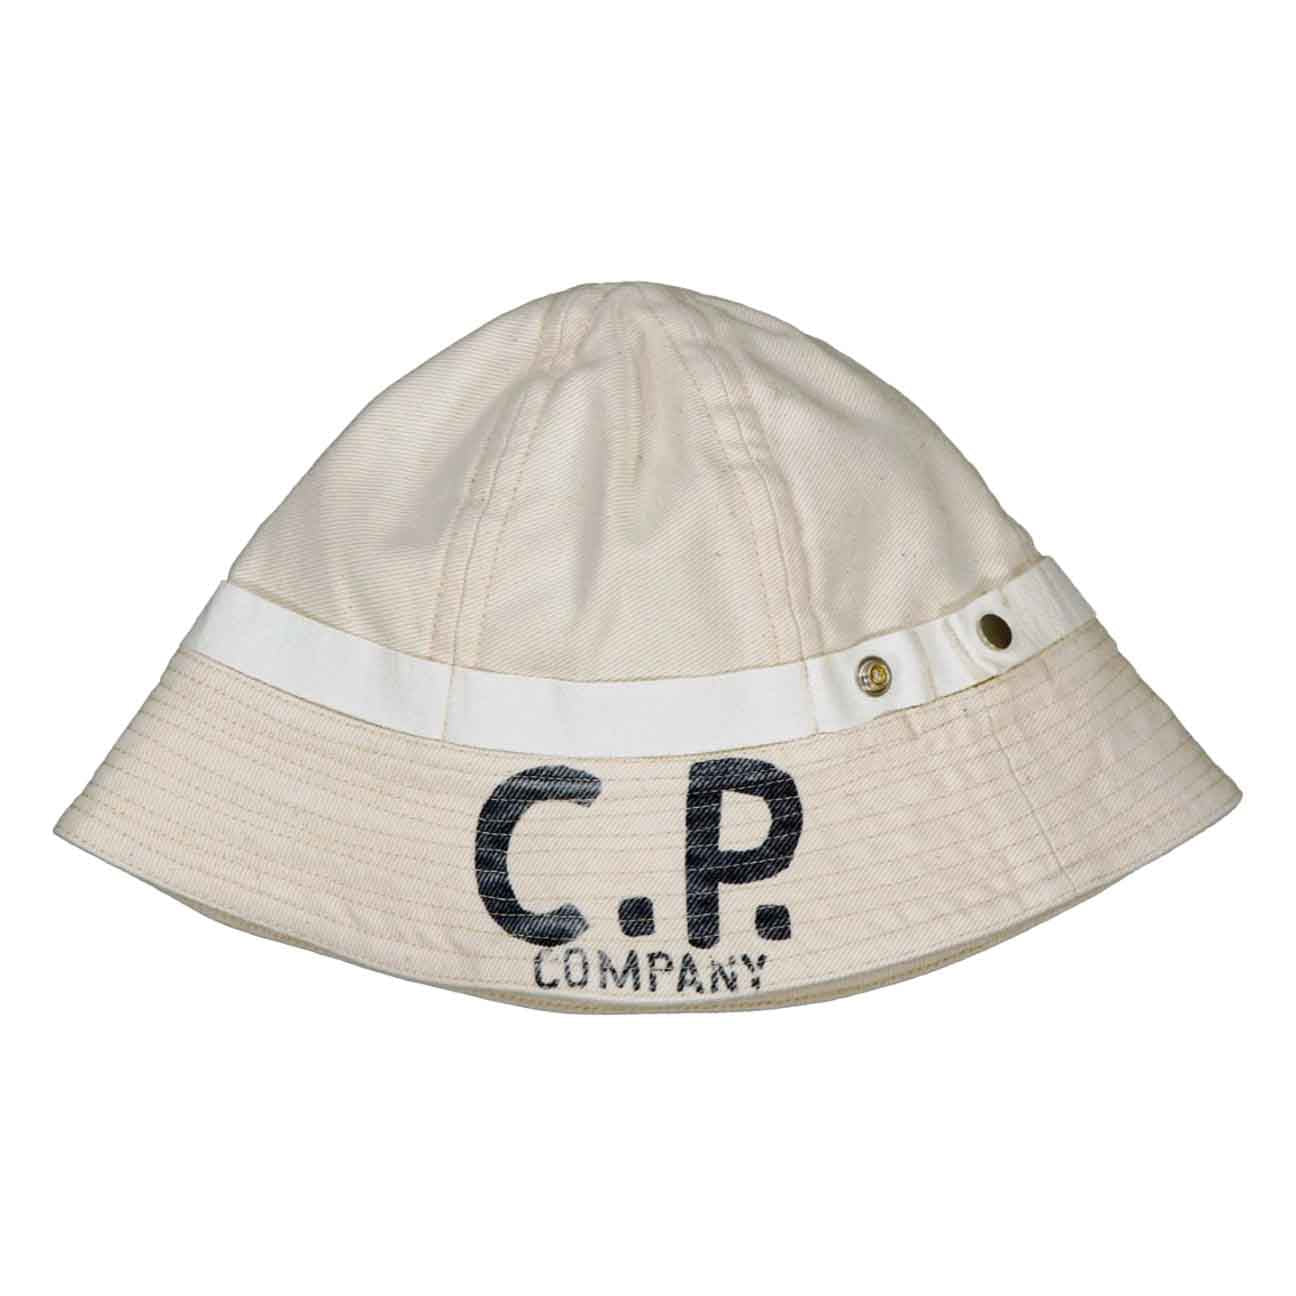 C.P. Company Cotton Twill Bucket Hat in Ecru